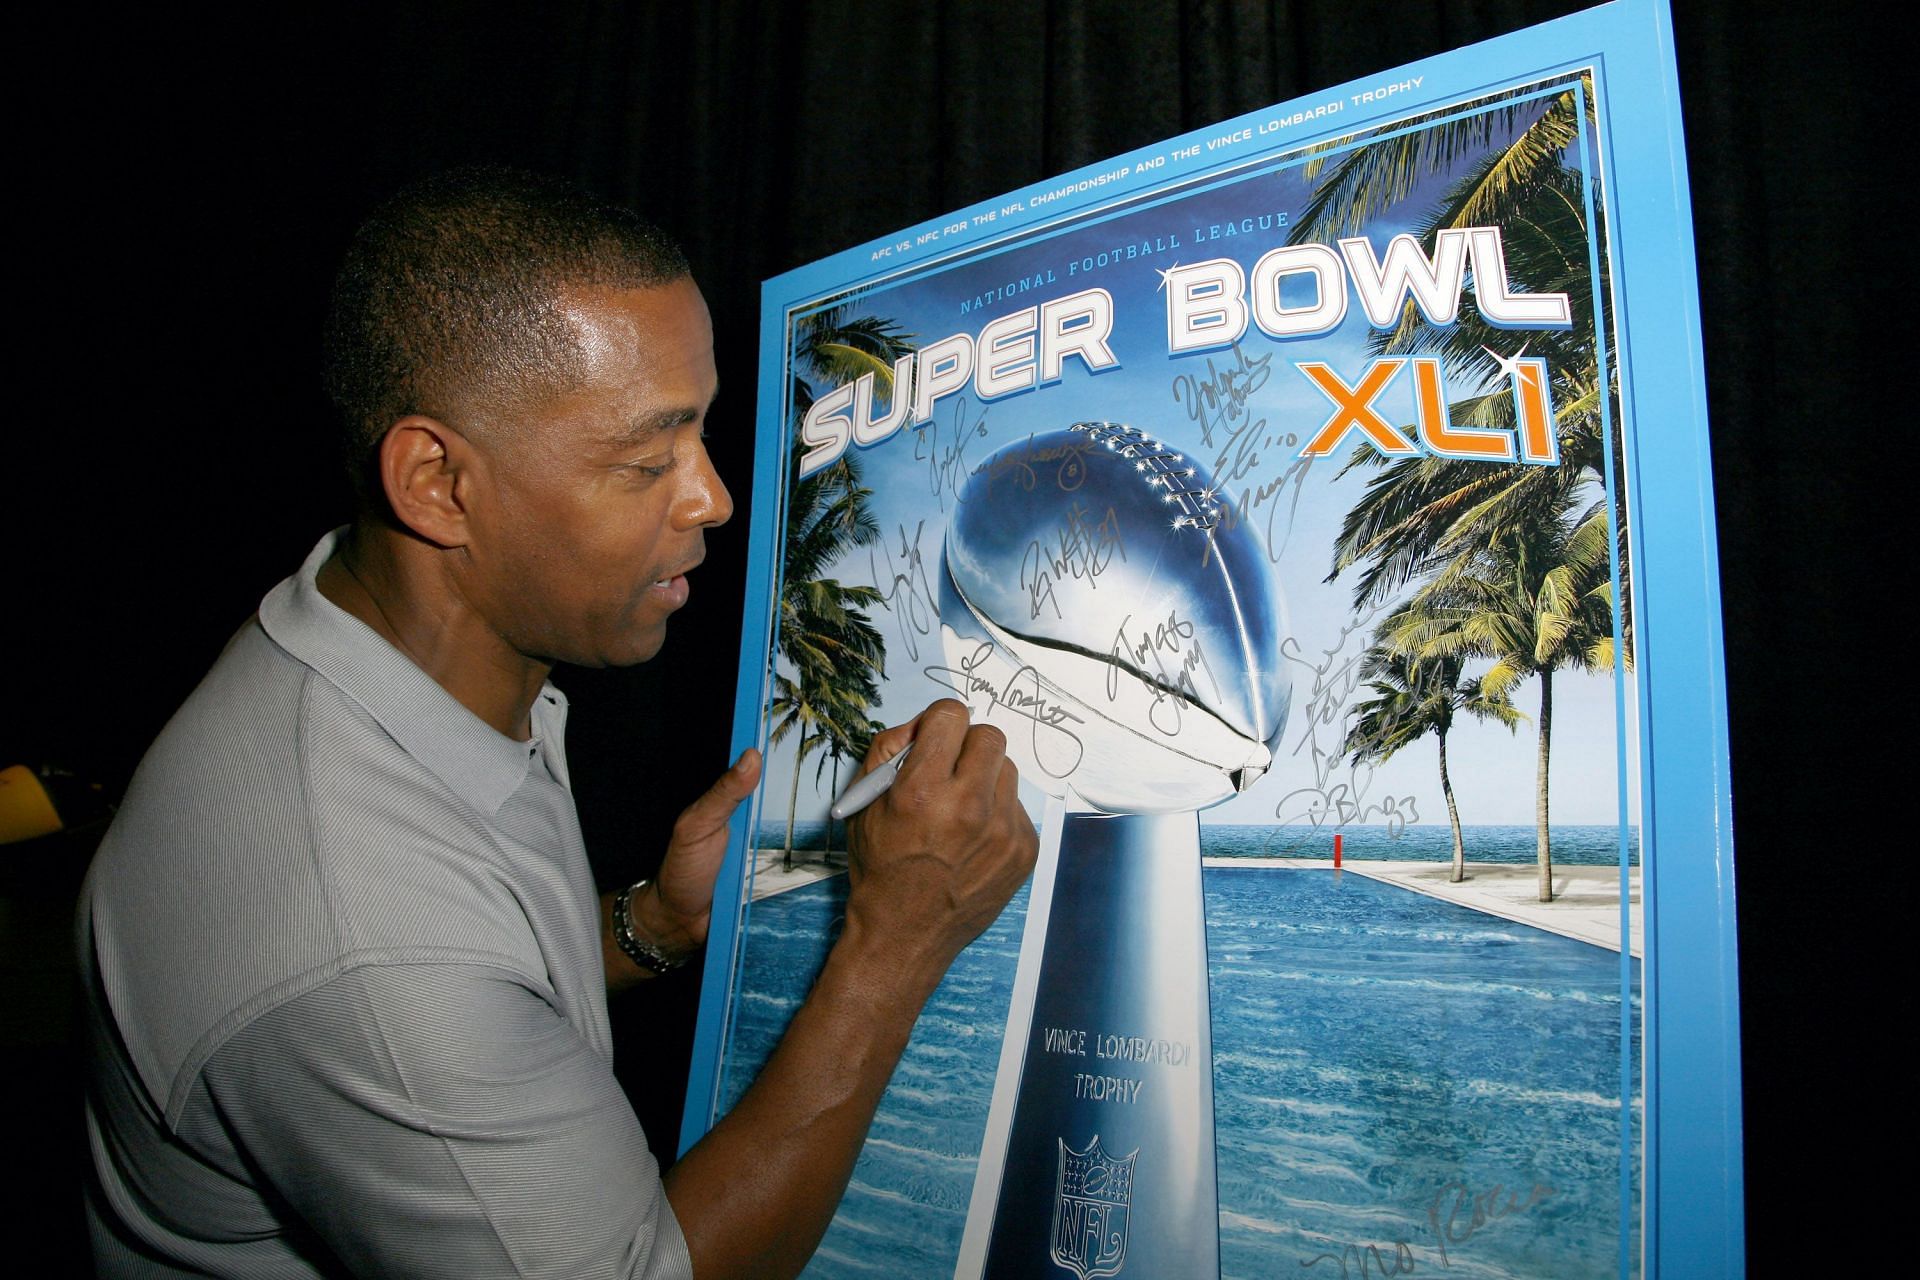 Tony Dorsett during Super Bowl XLI - On 3 Productions Gift Suite